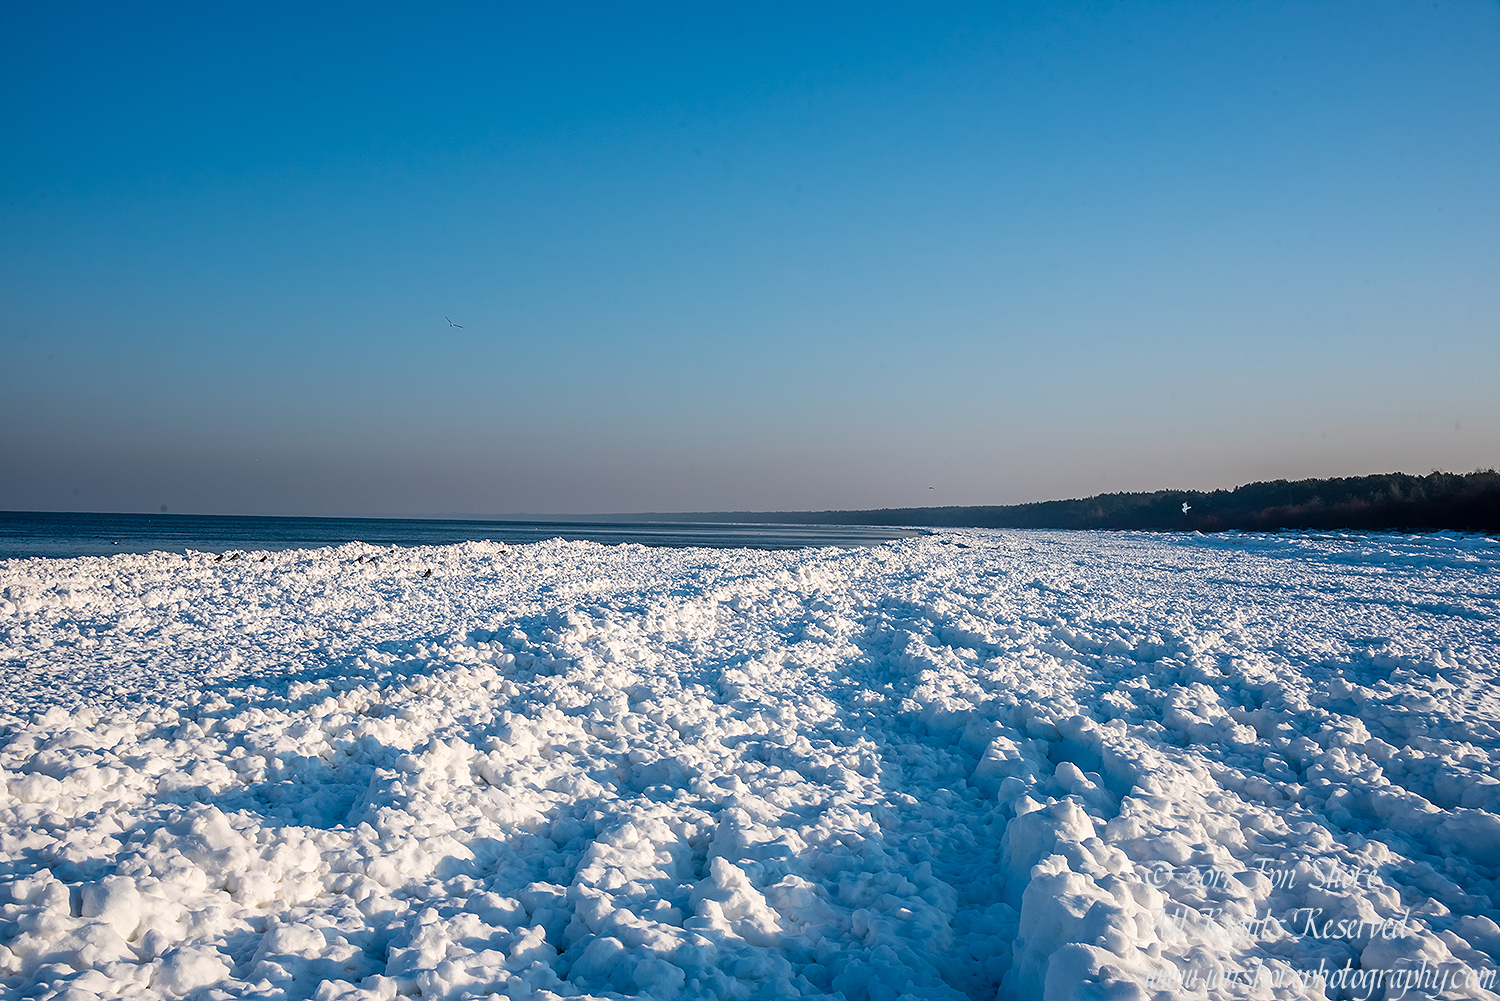 Winter at a Frozen Baltic Sea Beach. Nikkor 35mm